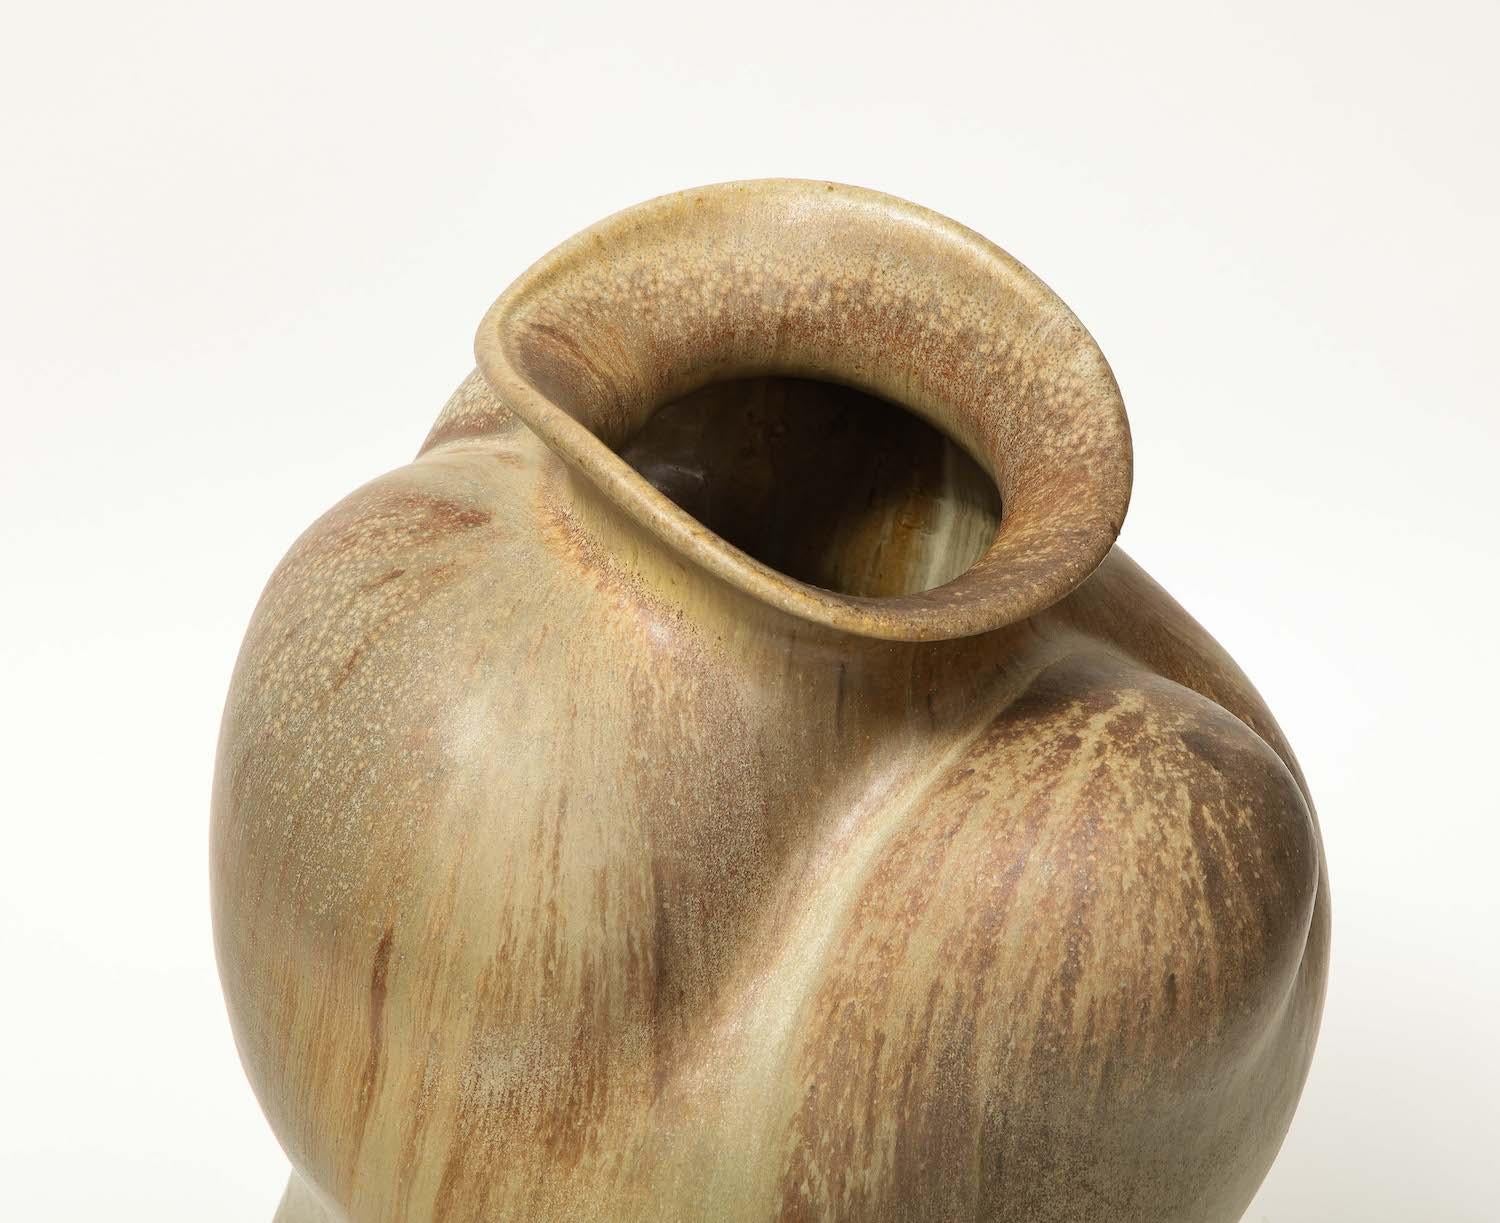 Glazed stoneware. Unique wood fired vessel.